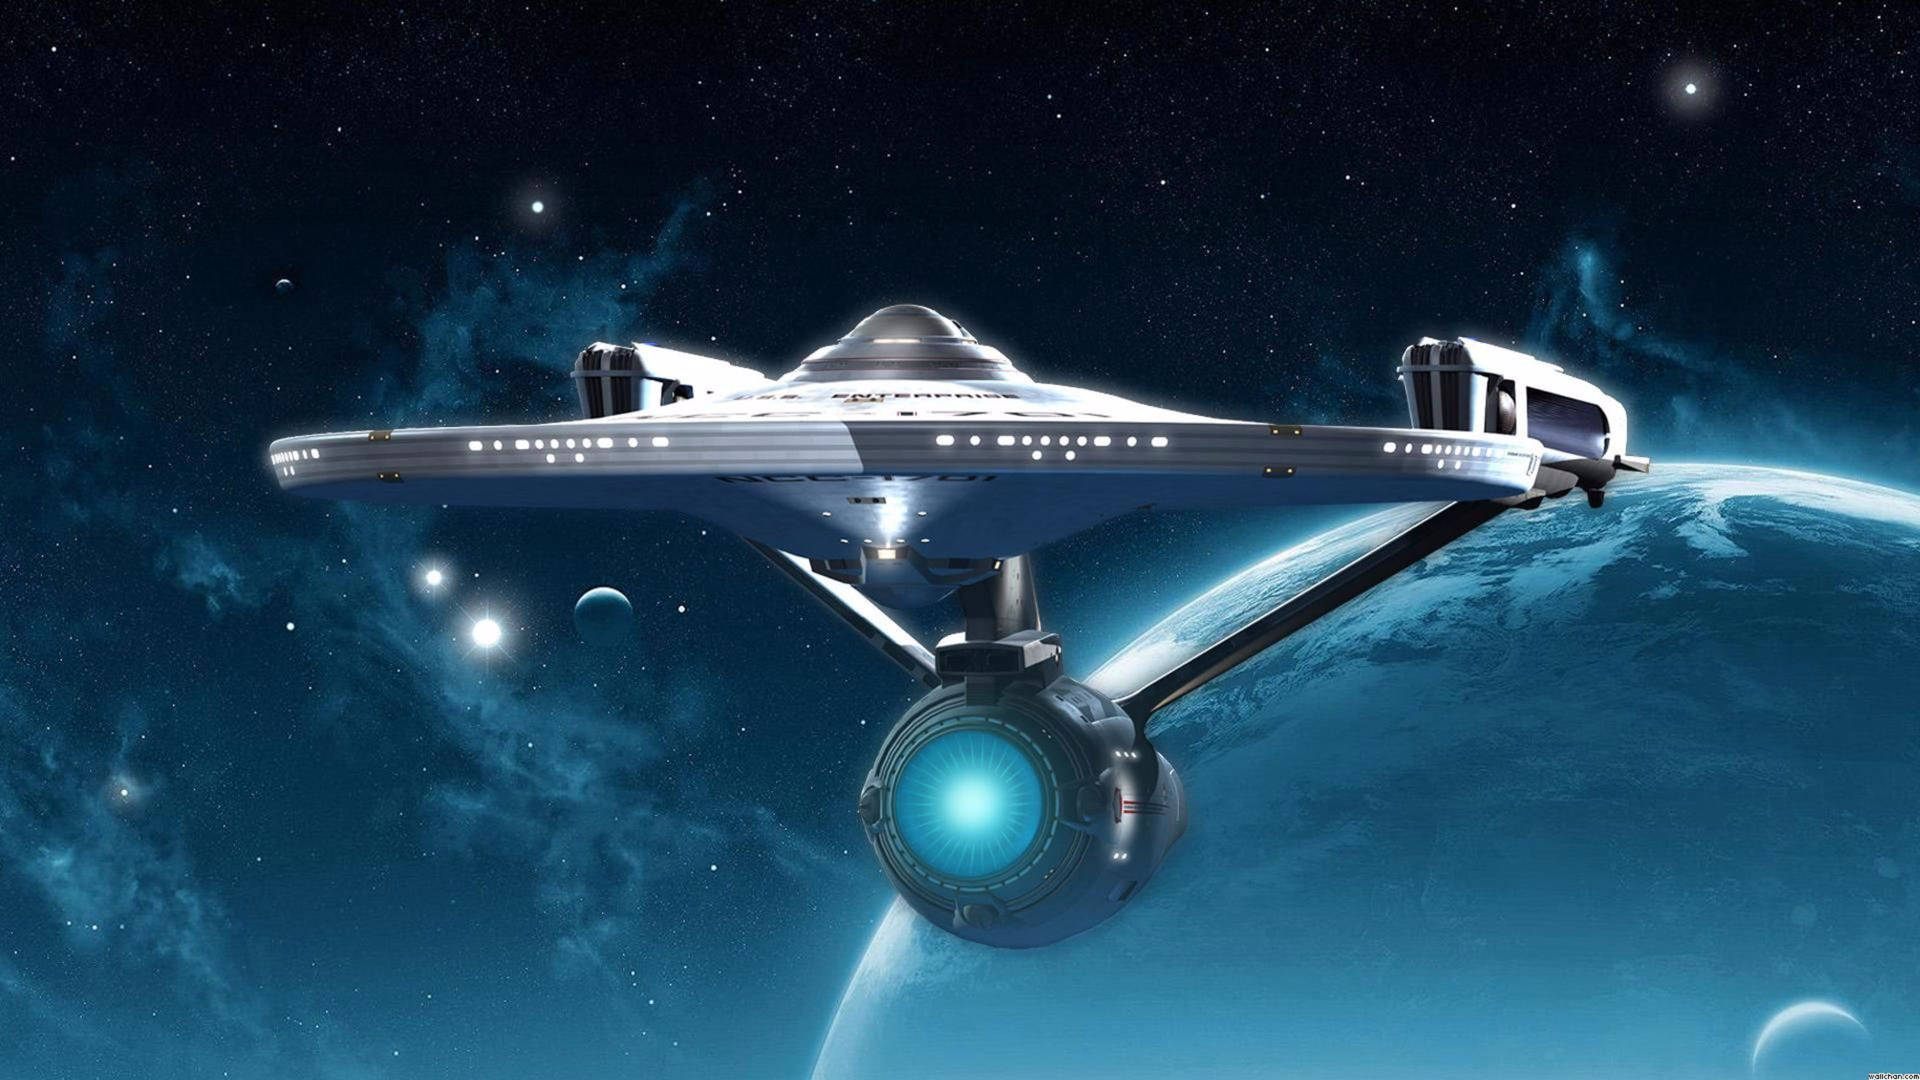 Spaceship Of Star Trek Wallpaper